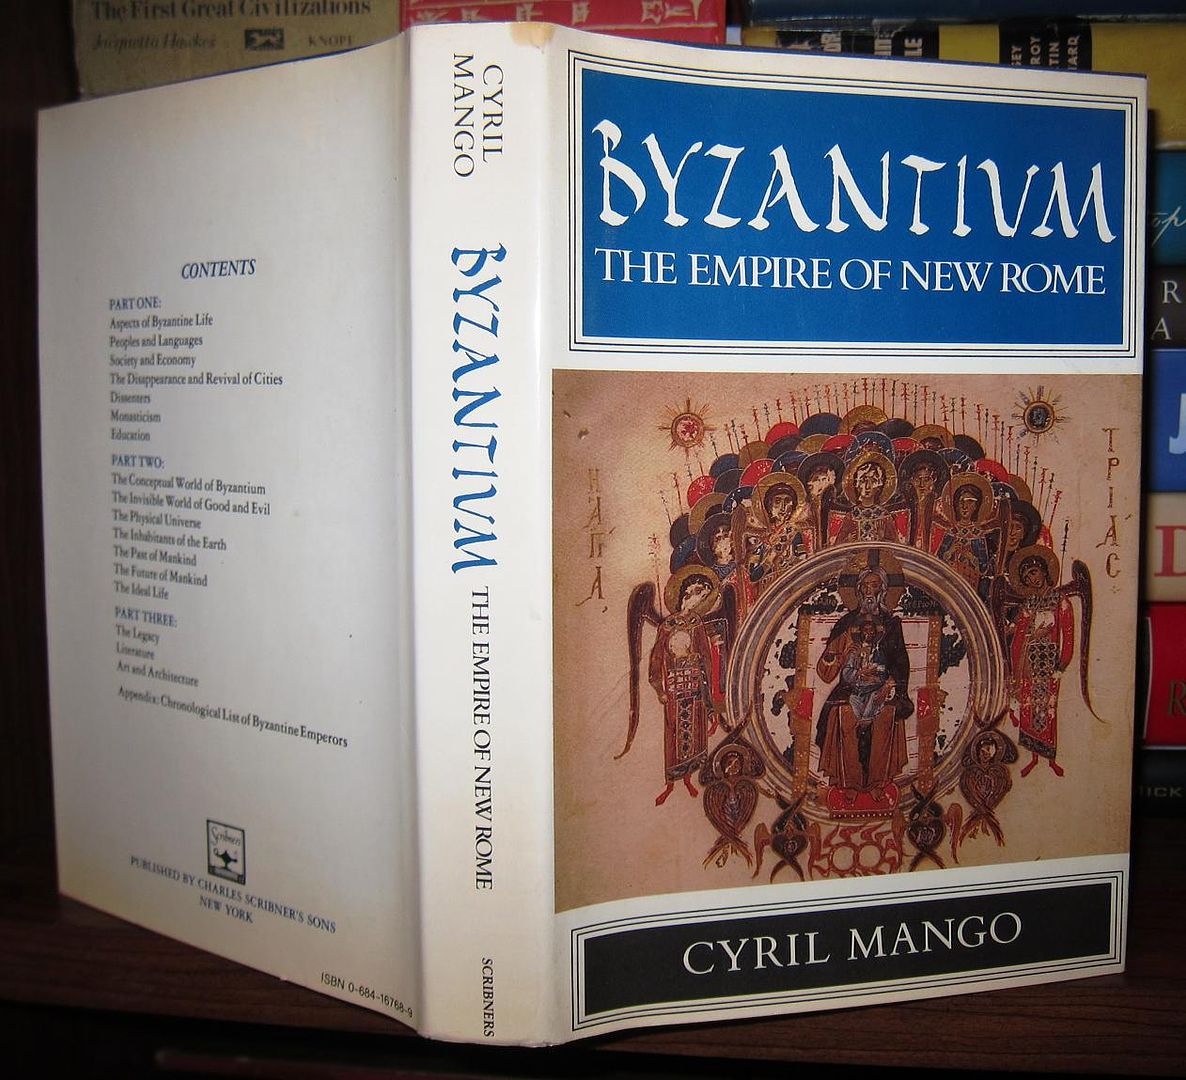 MANGO, CYRIL A. - Byzantium the Empire of New Rome